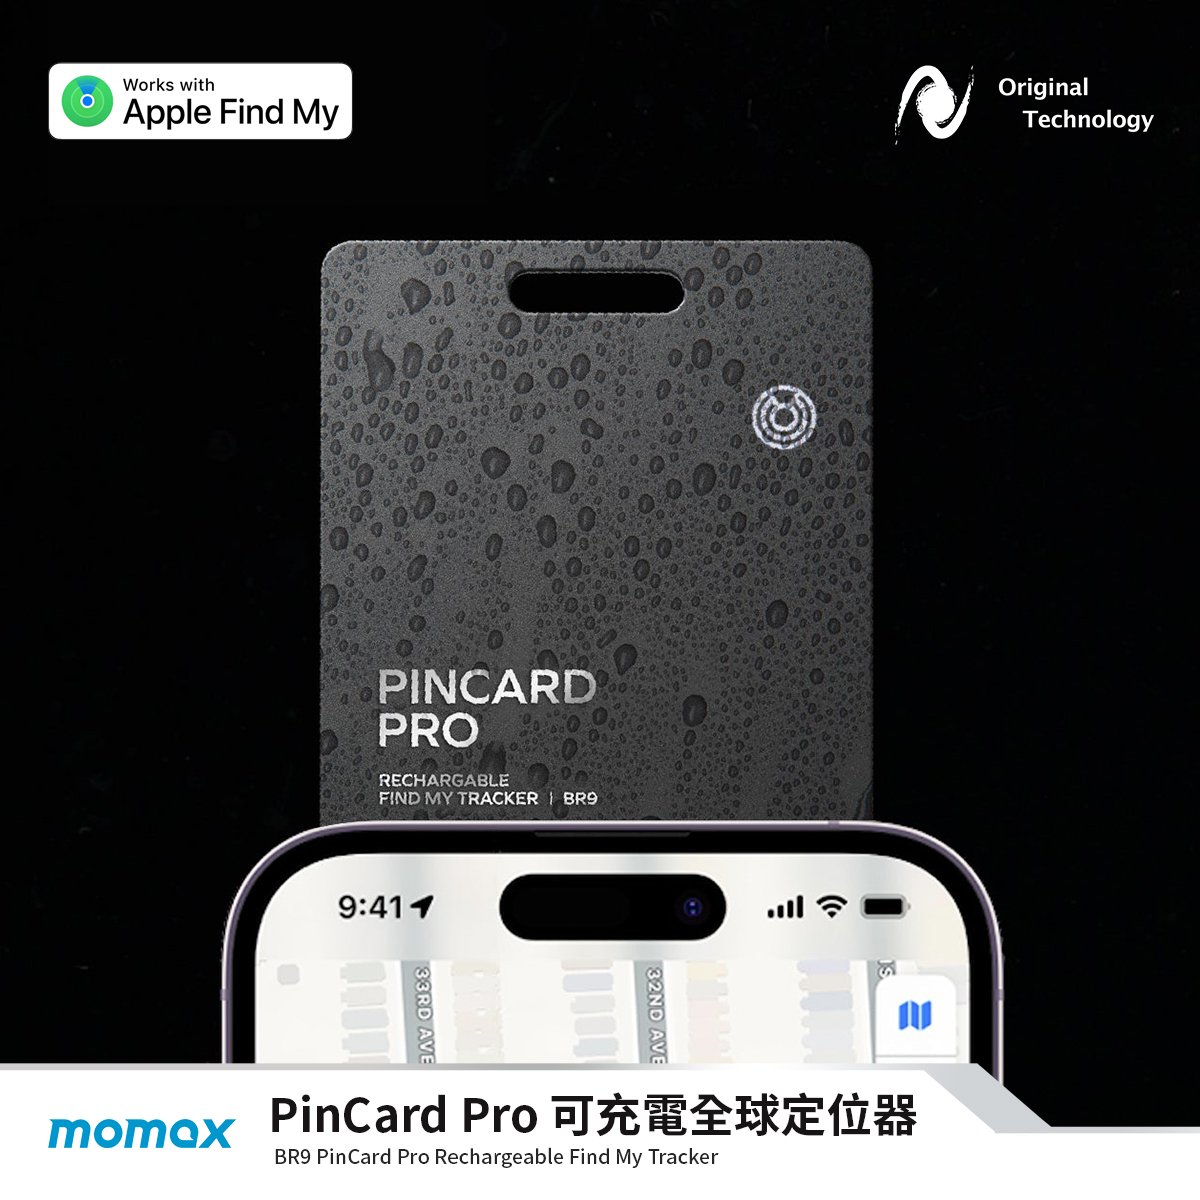 Momax PinCard Pro 可充電全球定位器 - 防止遺失，追蹤隨身物品